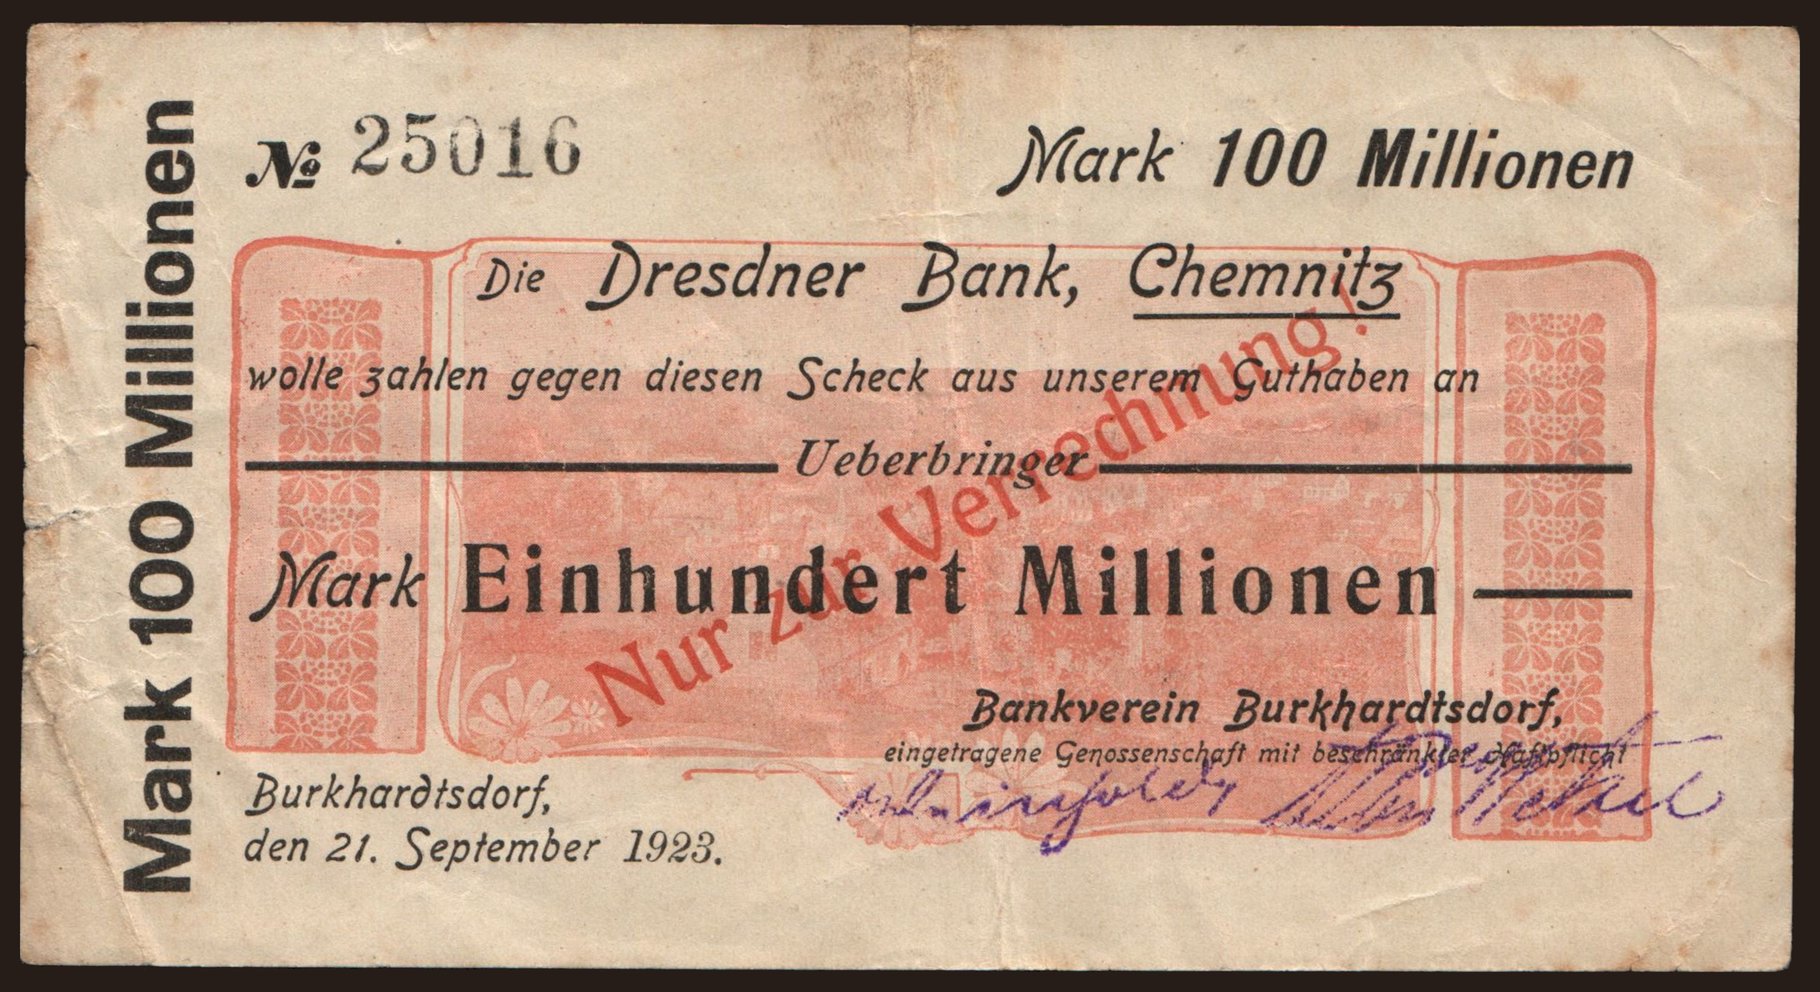 Burkhardtsdorf/ Bankverein Burkhardtsdorf, 100.000.000 Mark, 1923